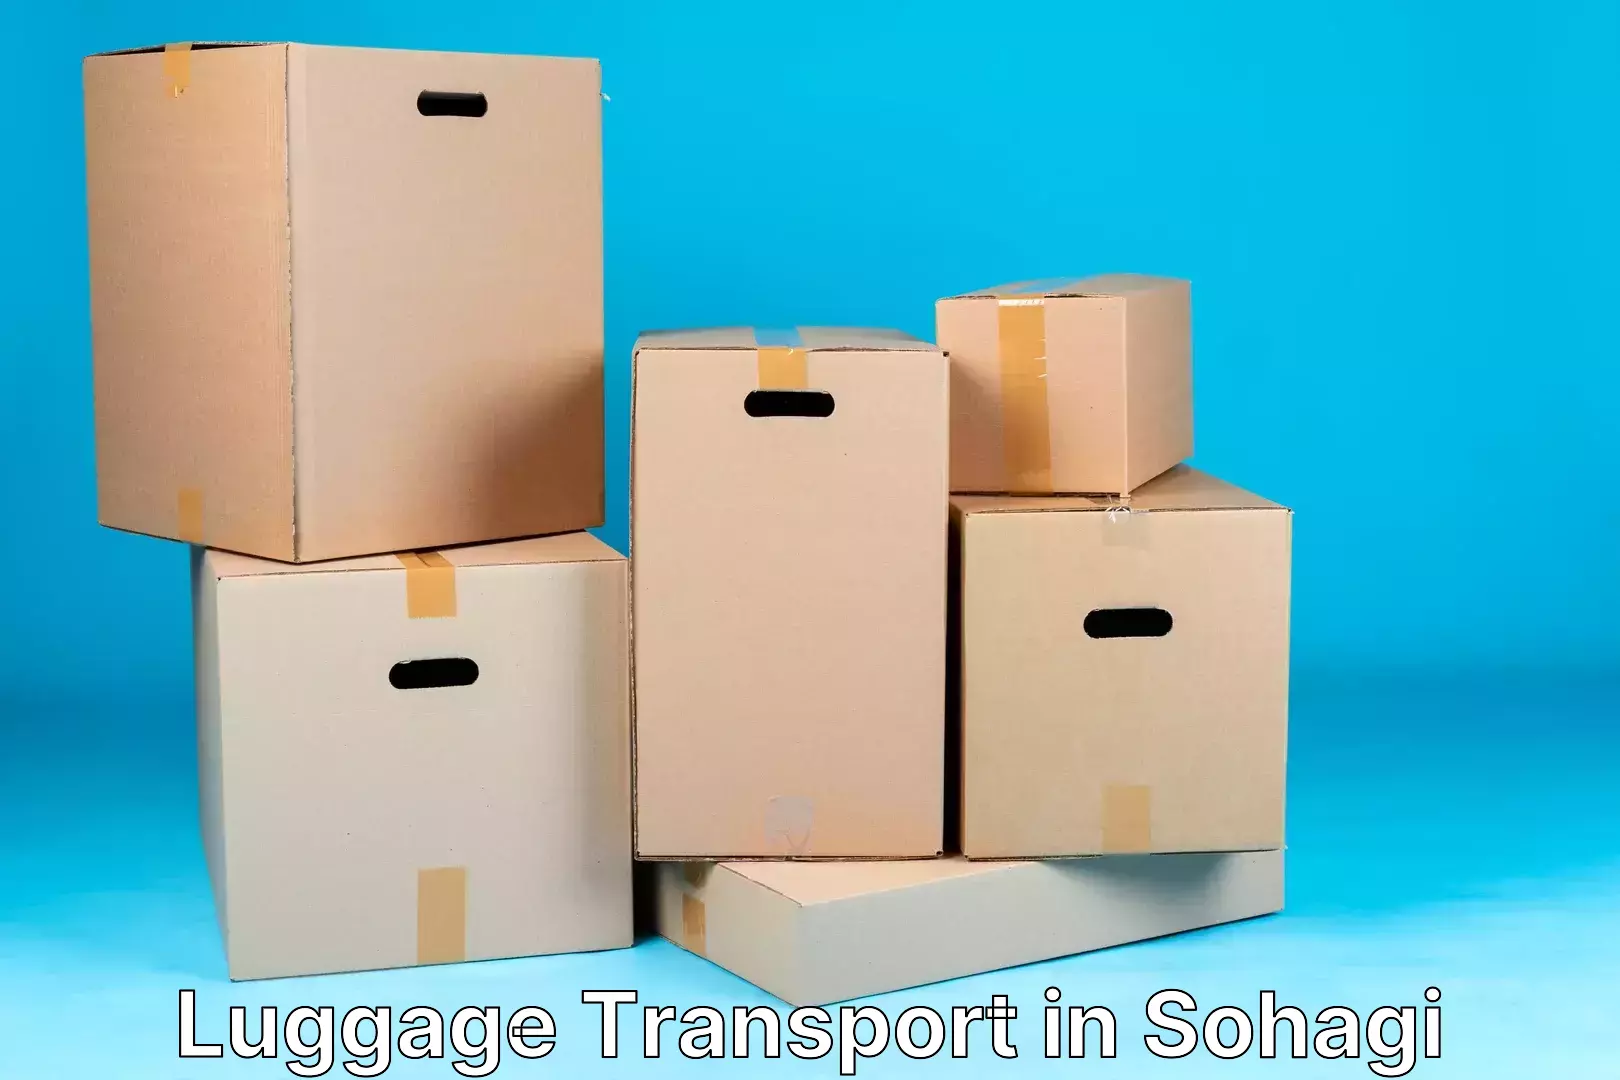 Heavy luggage shipping in Sohagi